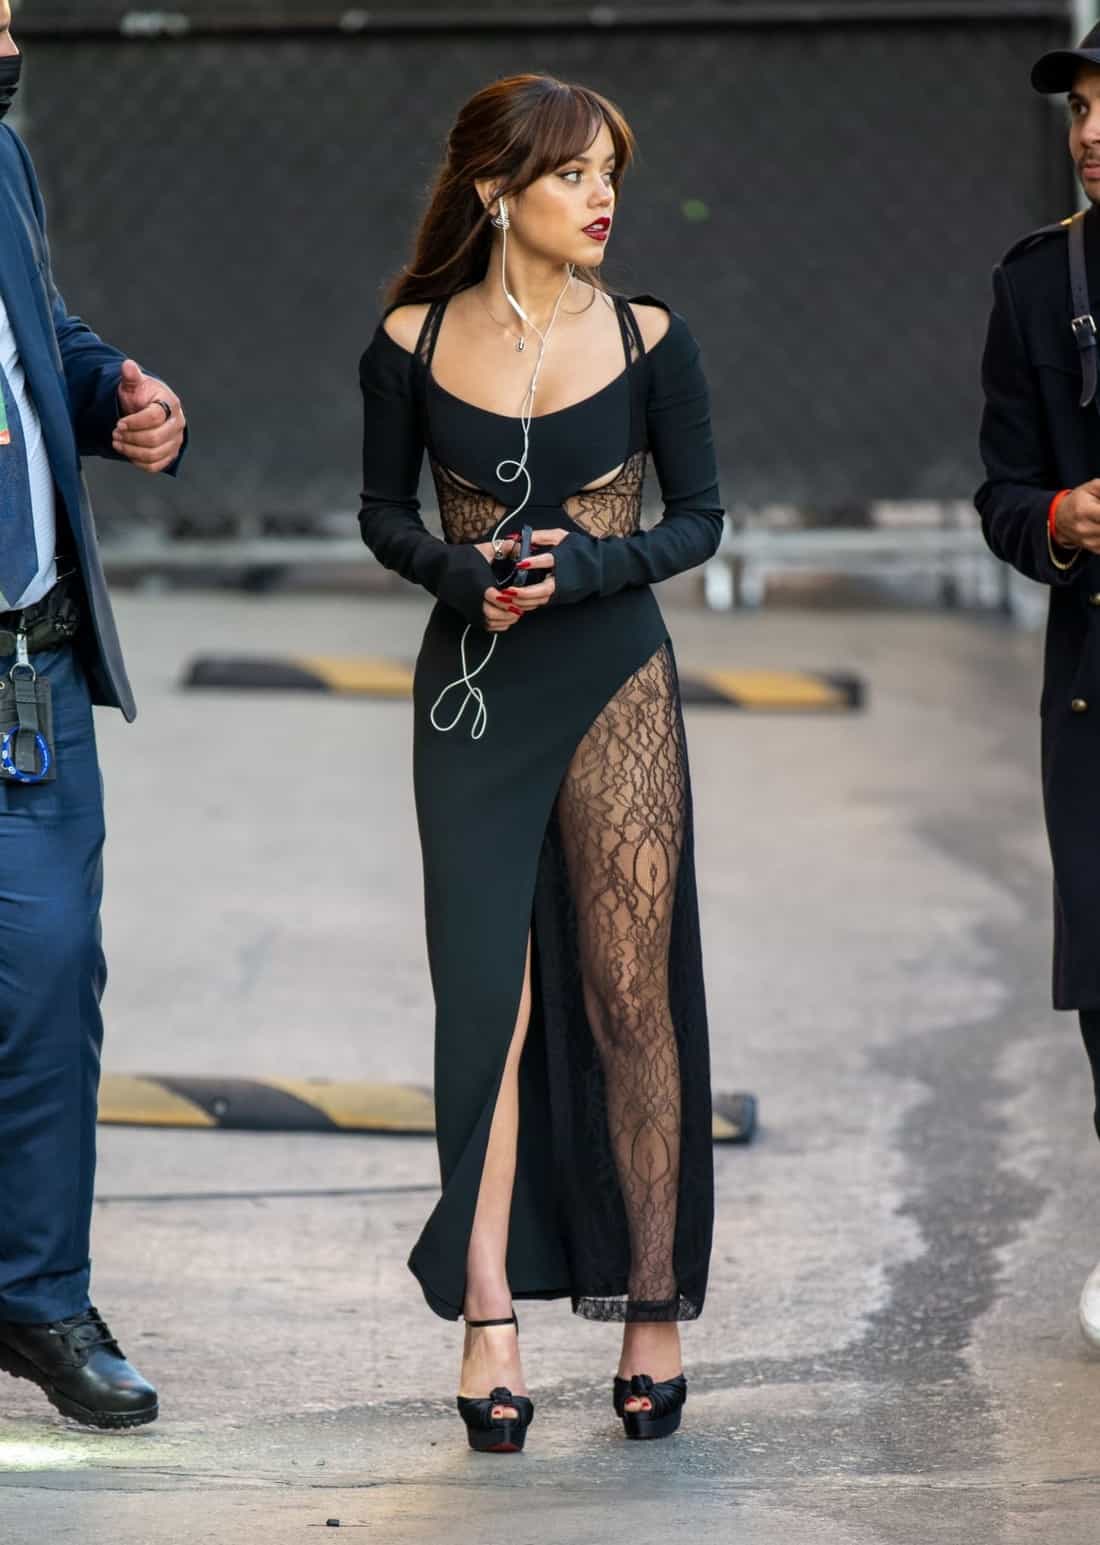 Jenna Ortega in Gothic Lace Cutout Dress on "Jimmy Kimmel Live" in LA